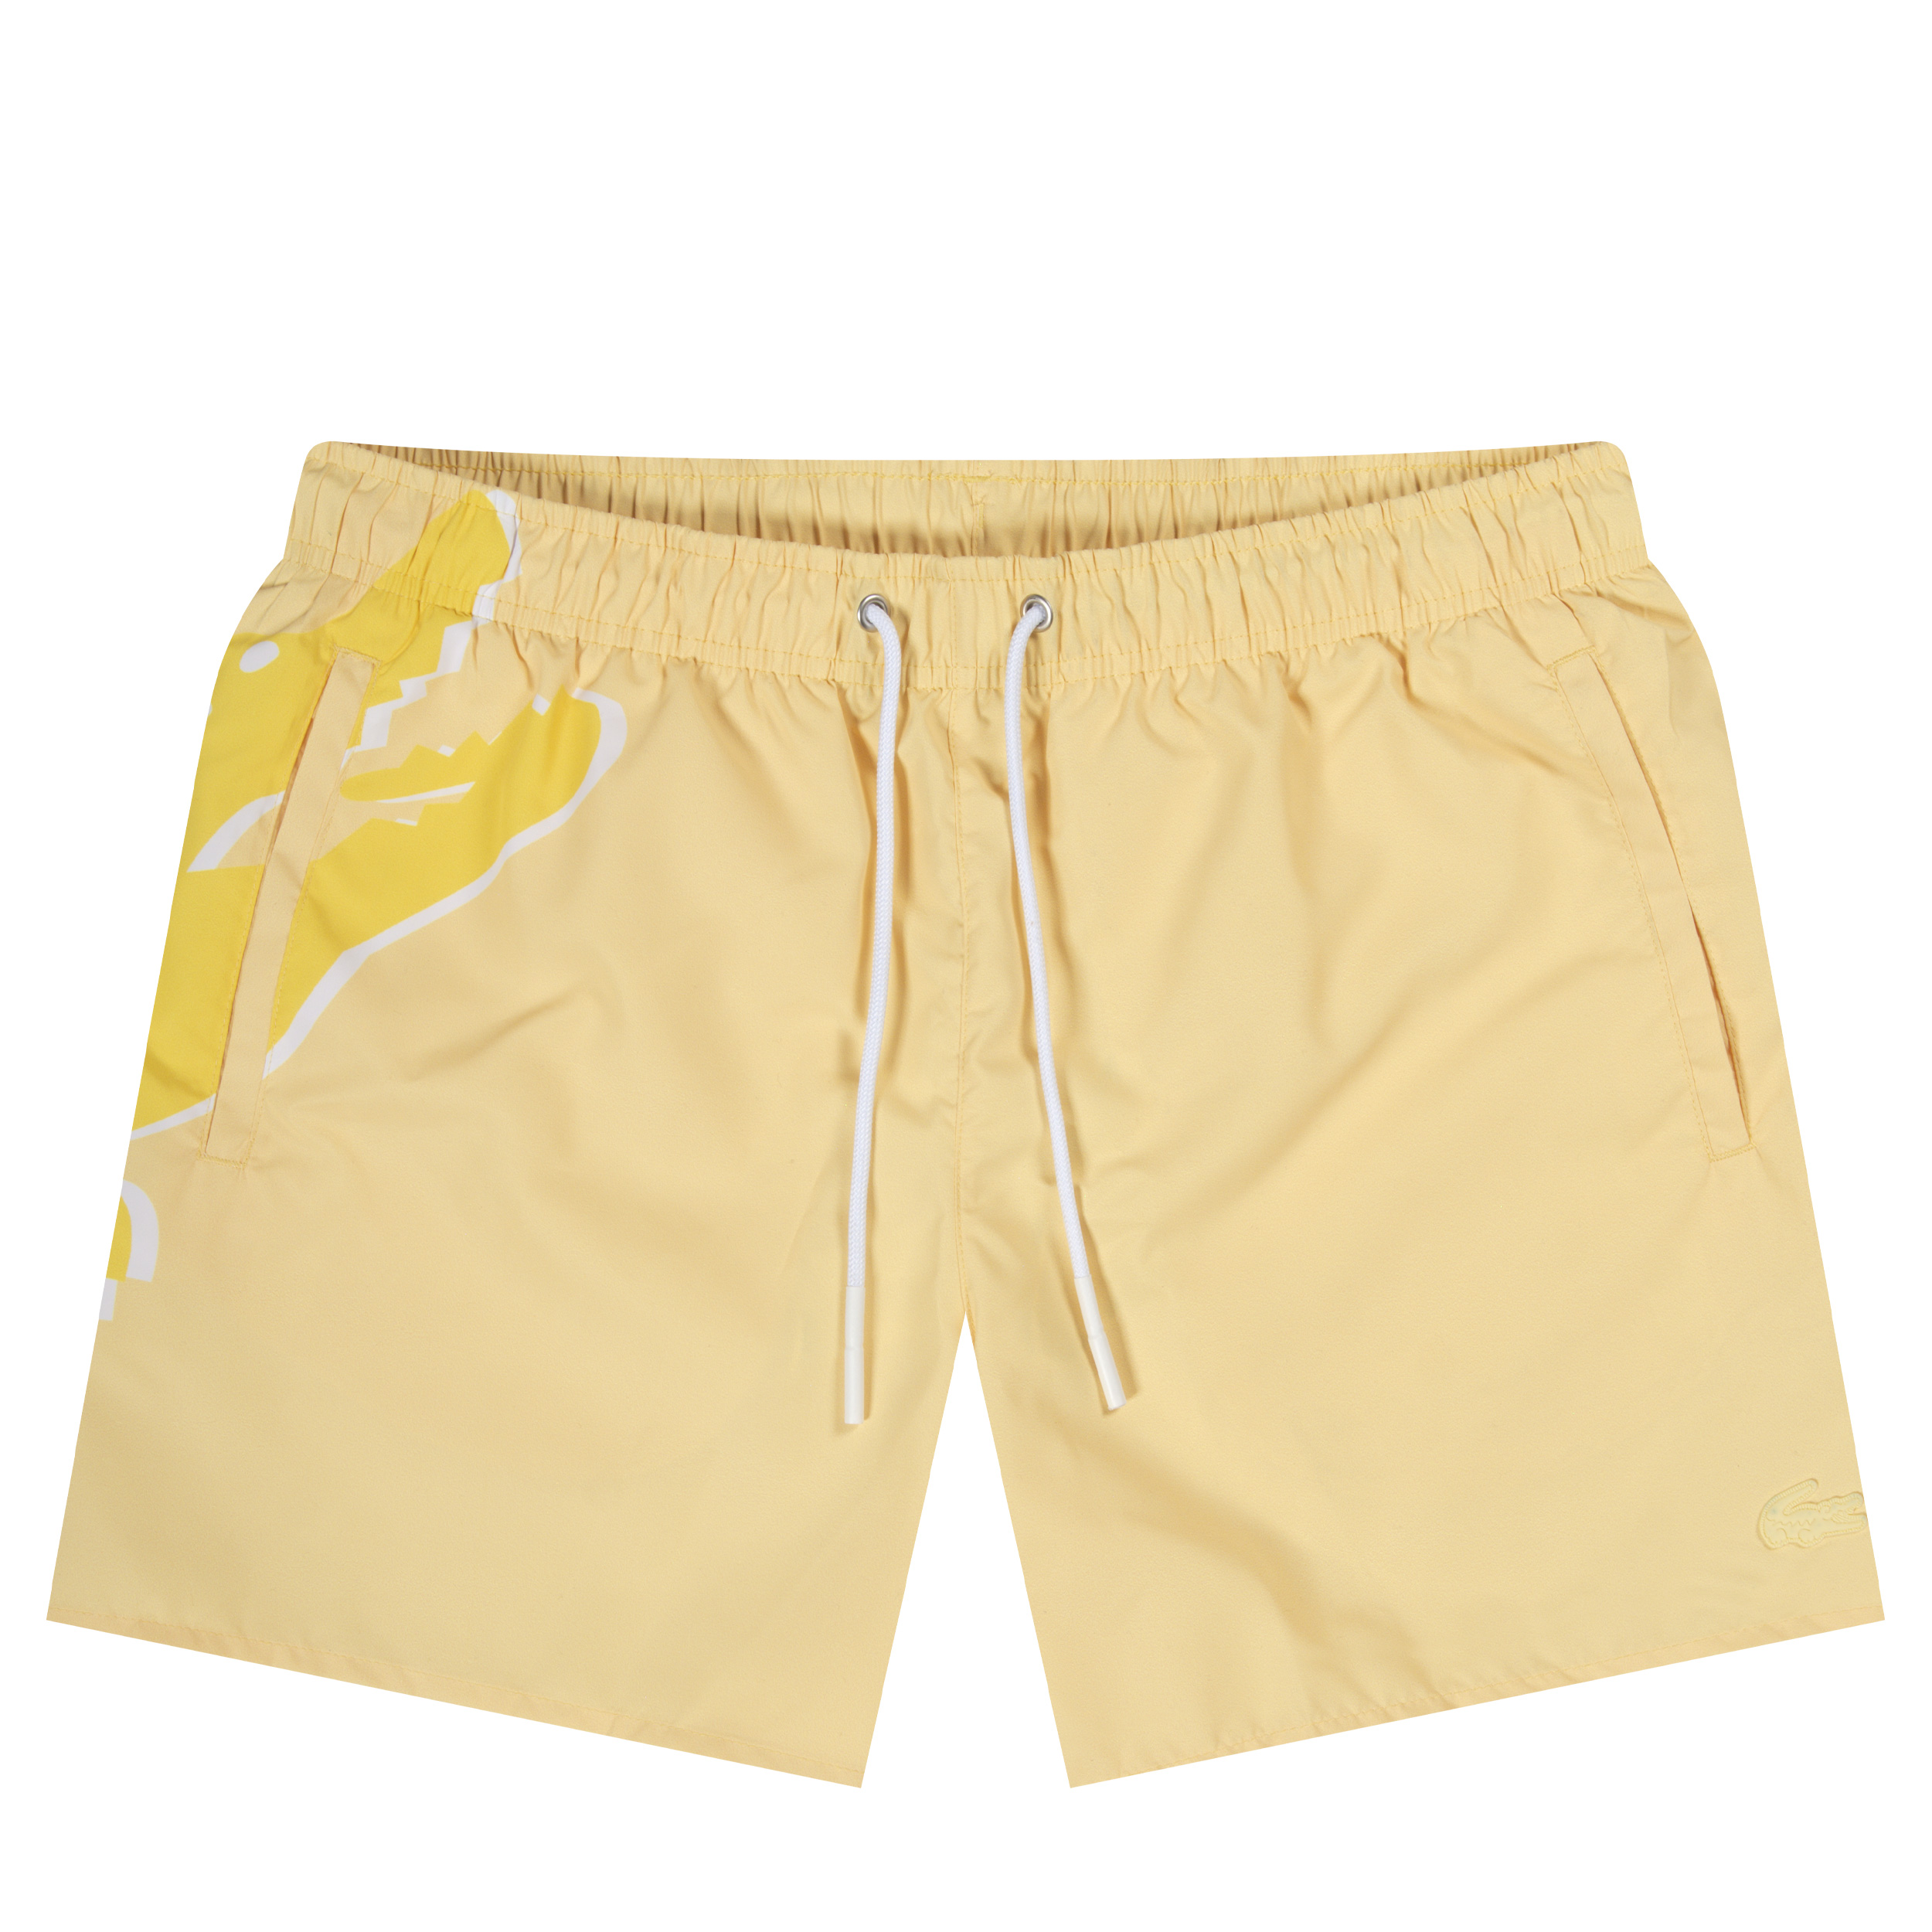 Lacoste ’Oversized Croc Print’ Quick Dry Swim Shorts Yellow